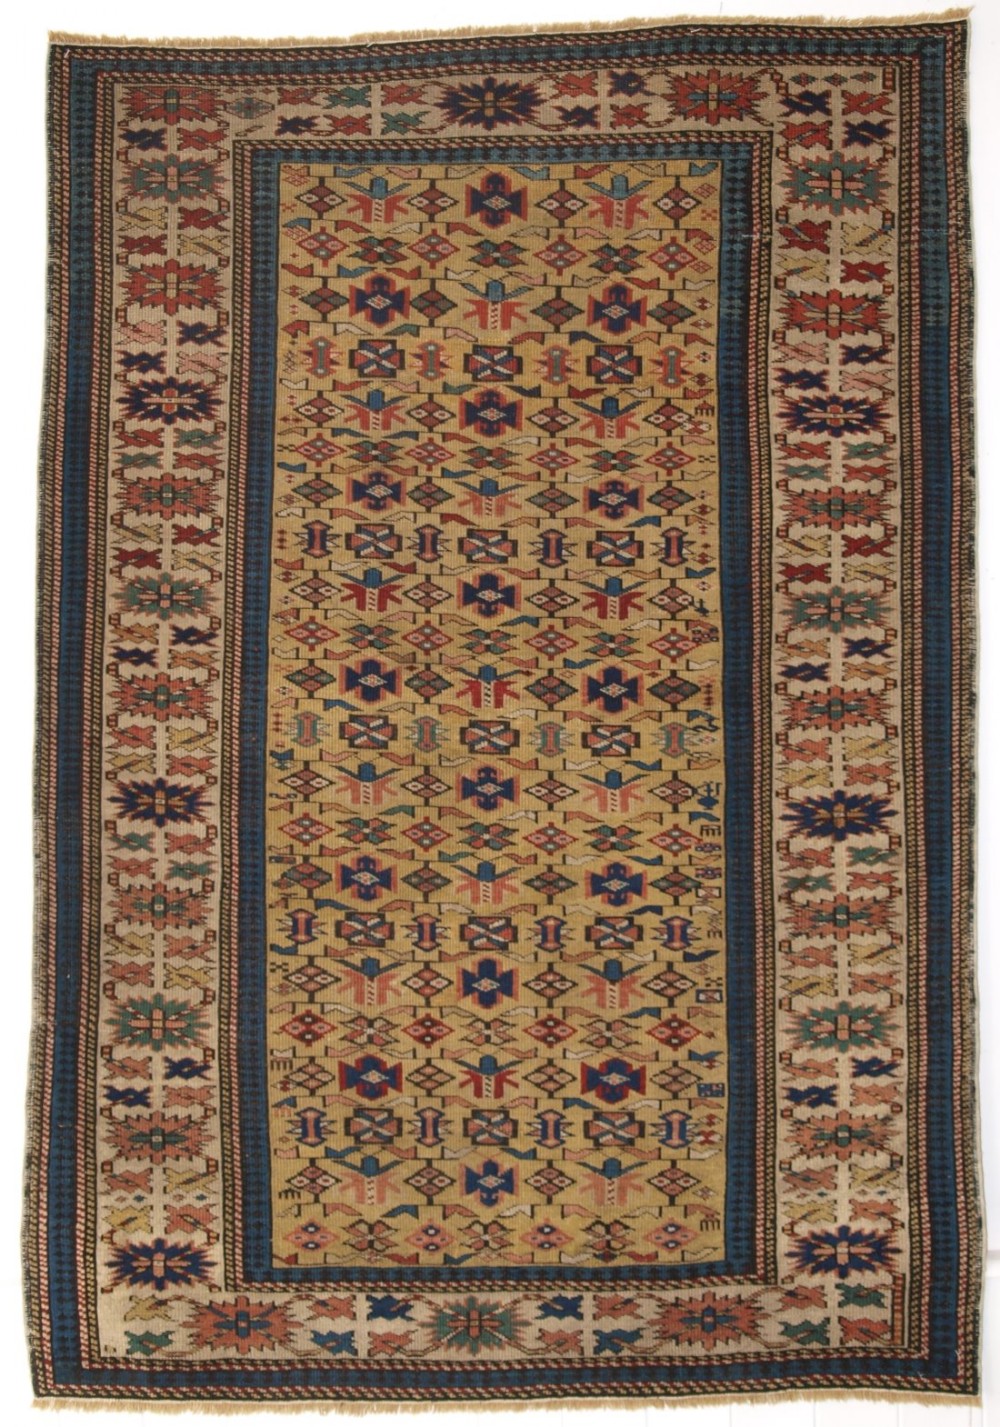 antique caucasian kuba rug with yellow ground very fine weave circa 1880